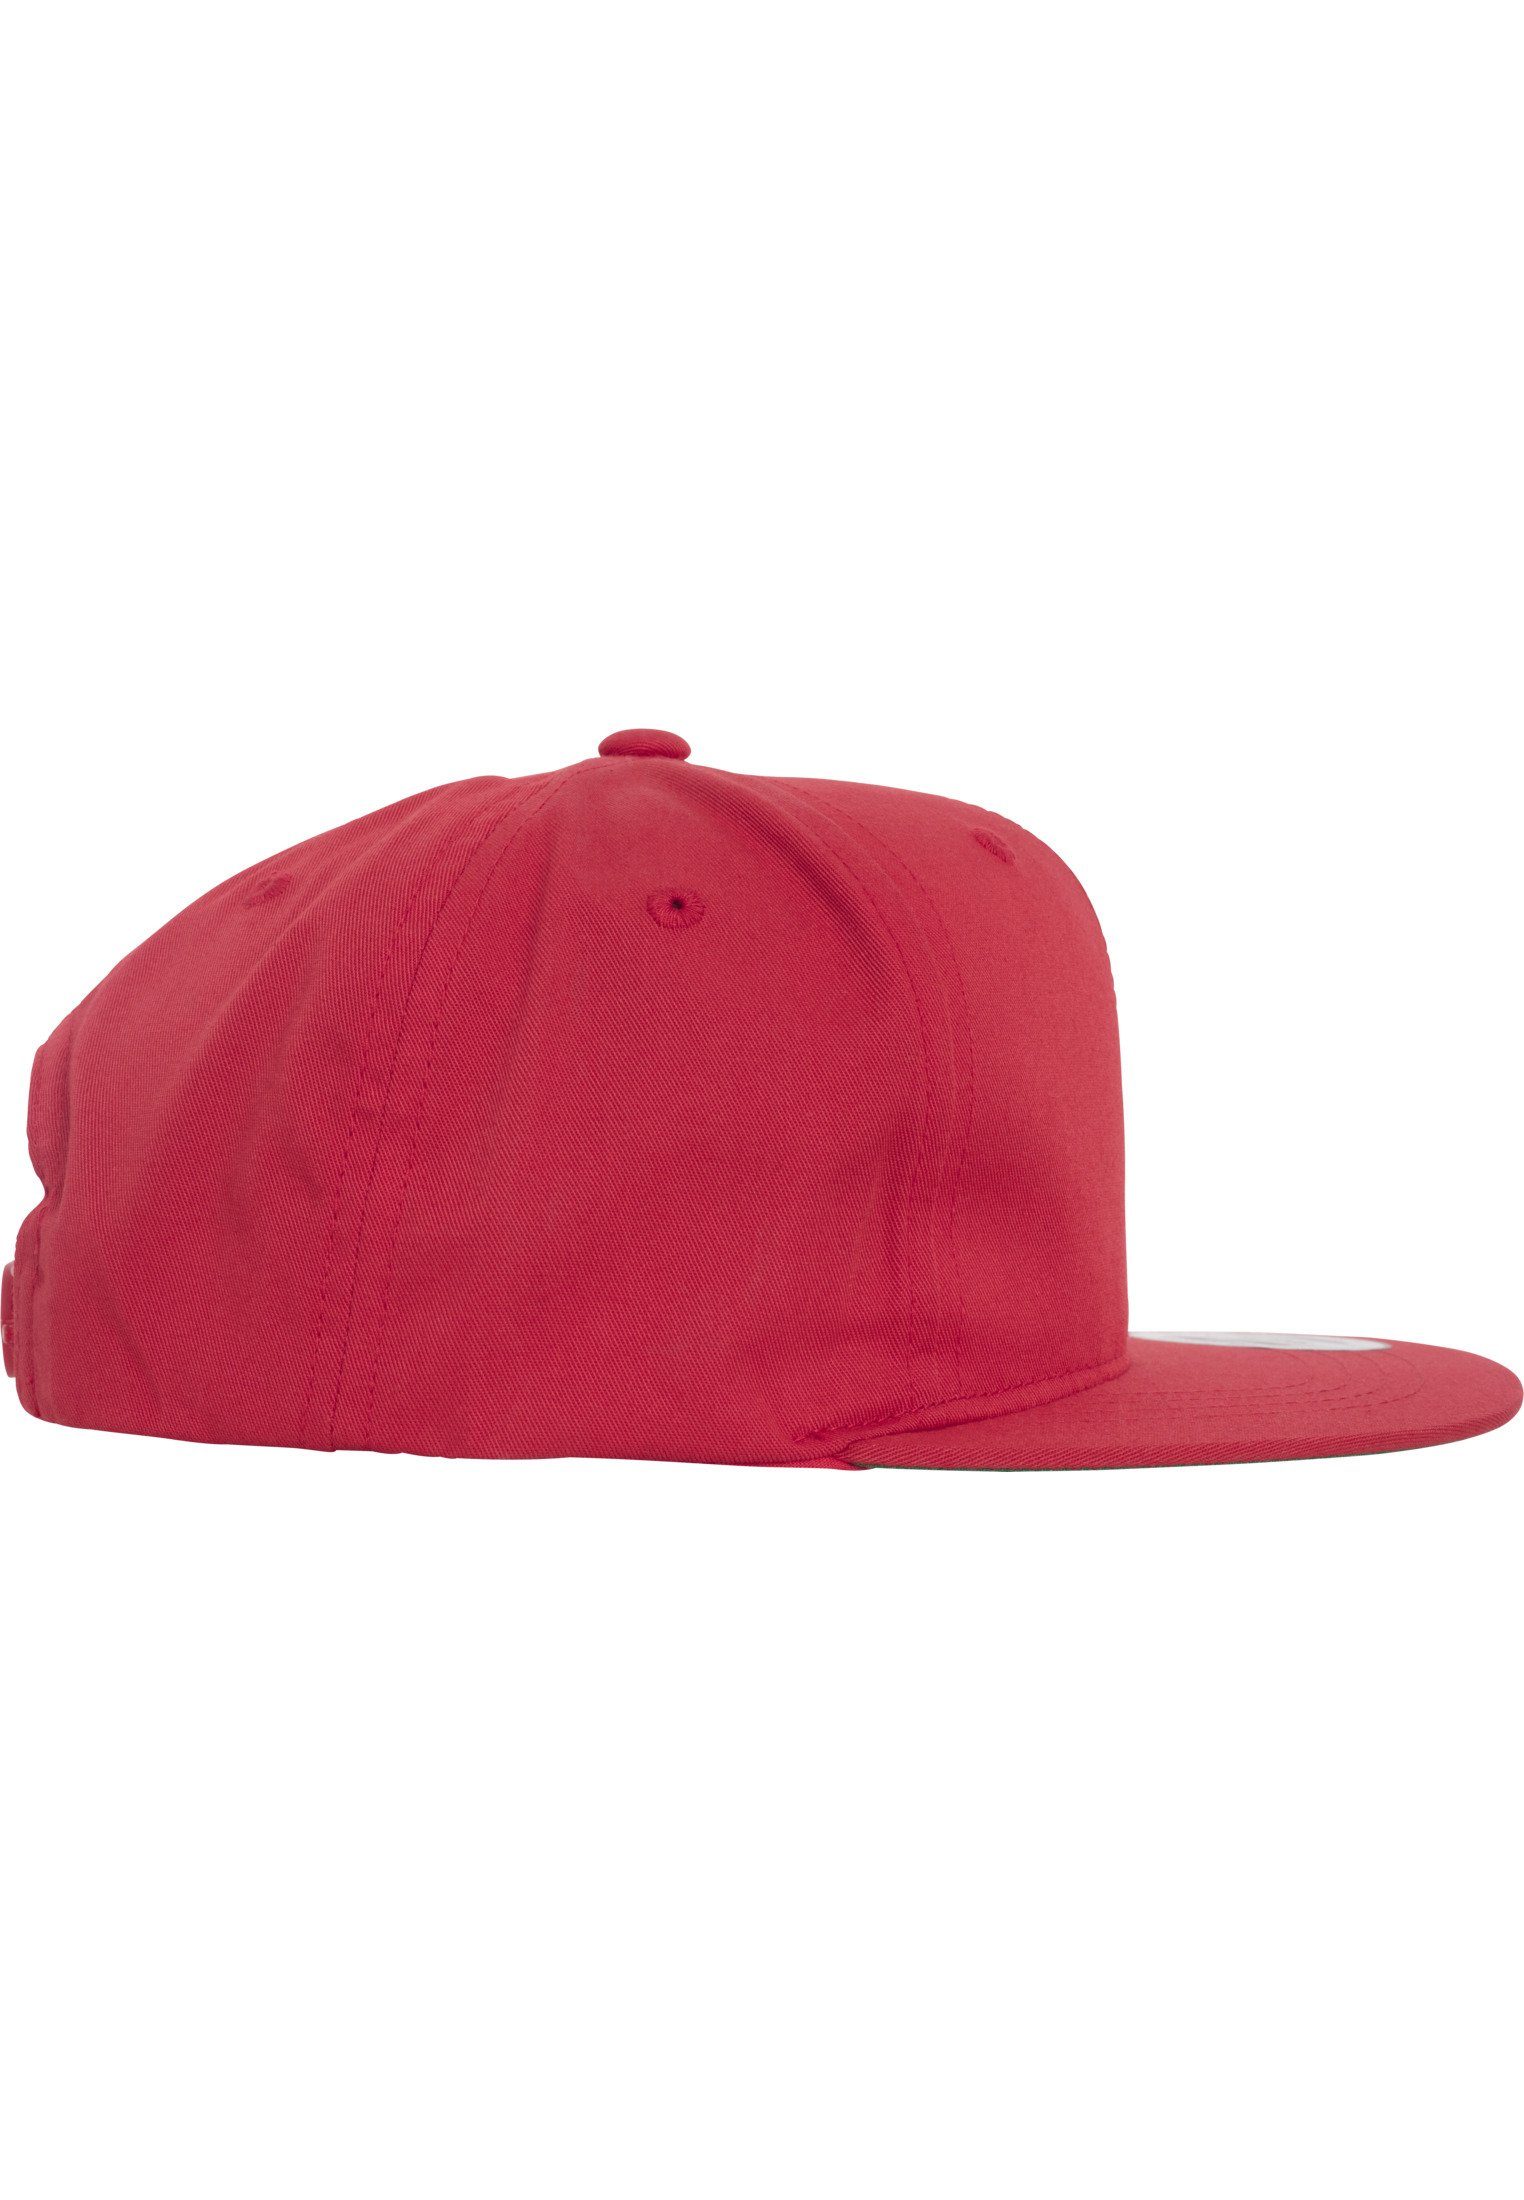 Flexfit Flex Cap Snapback Youth Pro-Style Snapback Twill red Cap